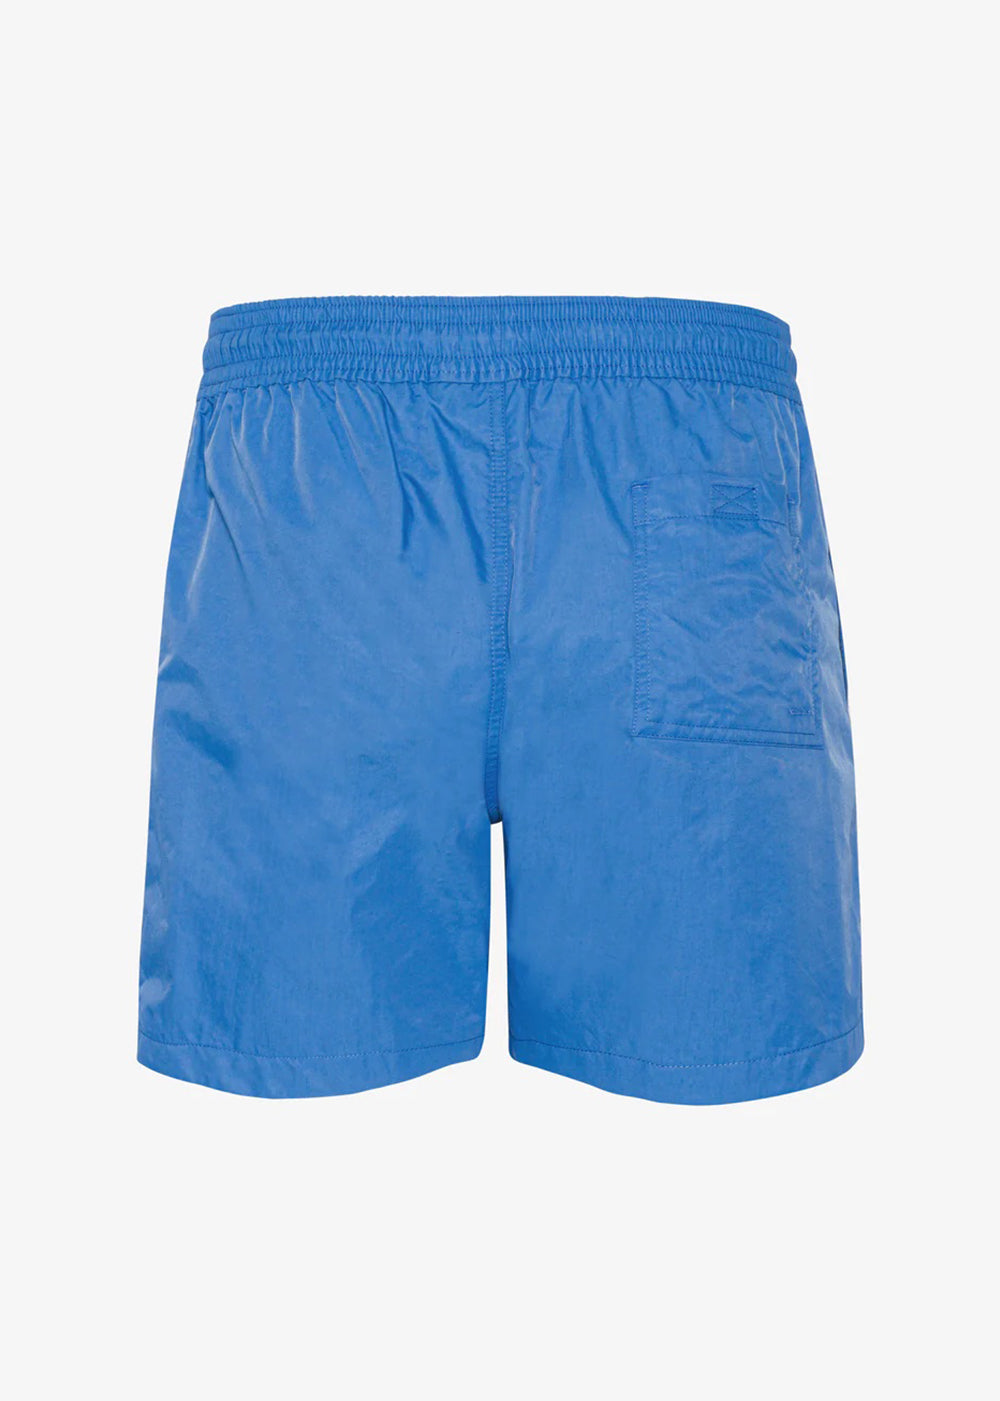 Classic Swim Shorts - Pacific Blue - Colorful Standard Canada - Danali